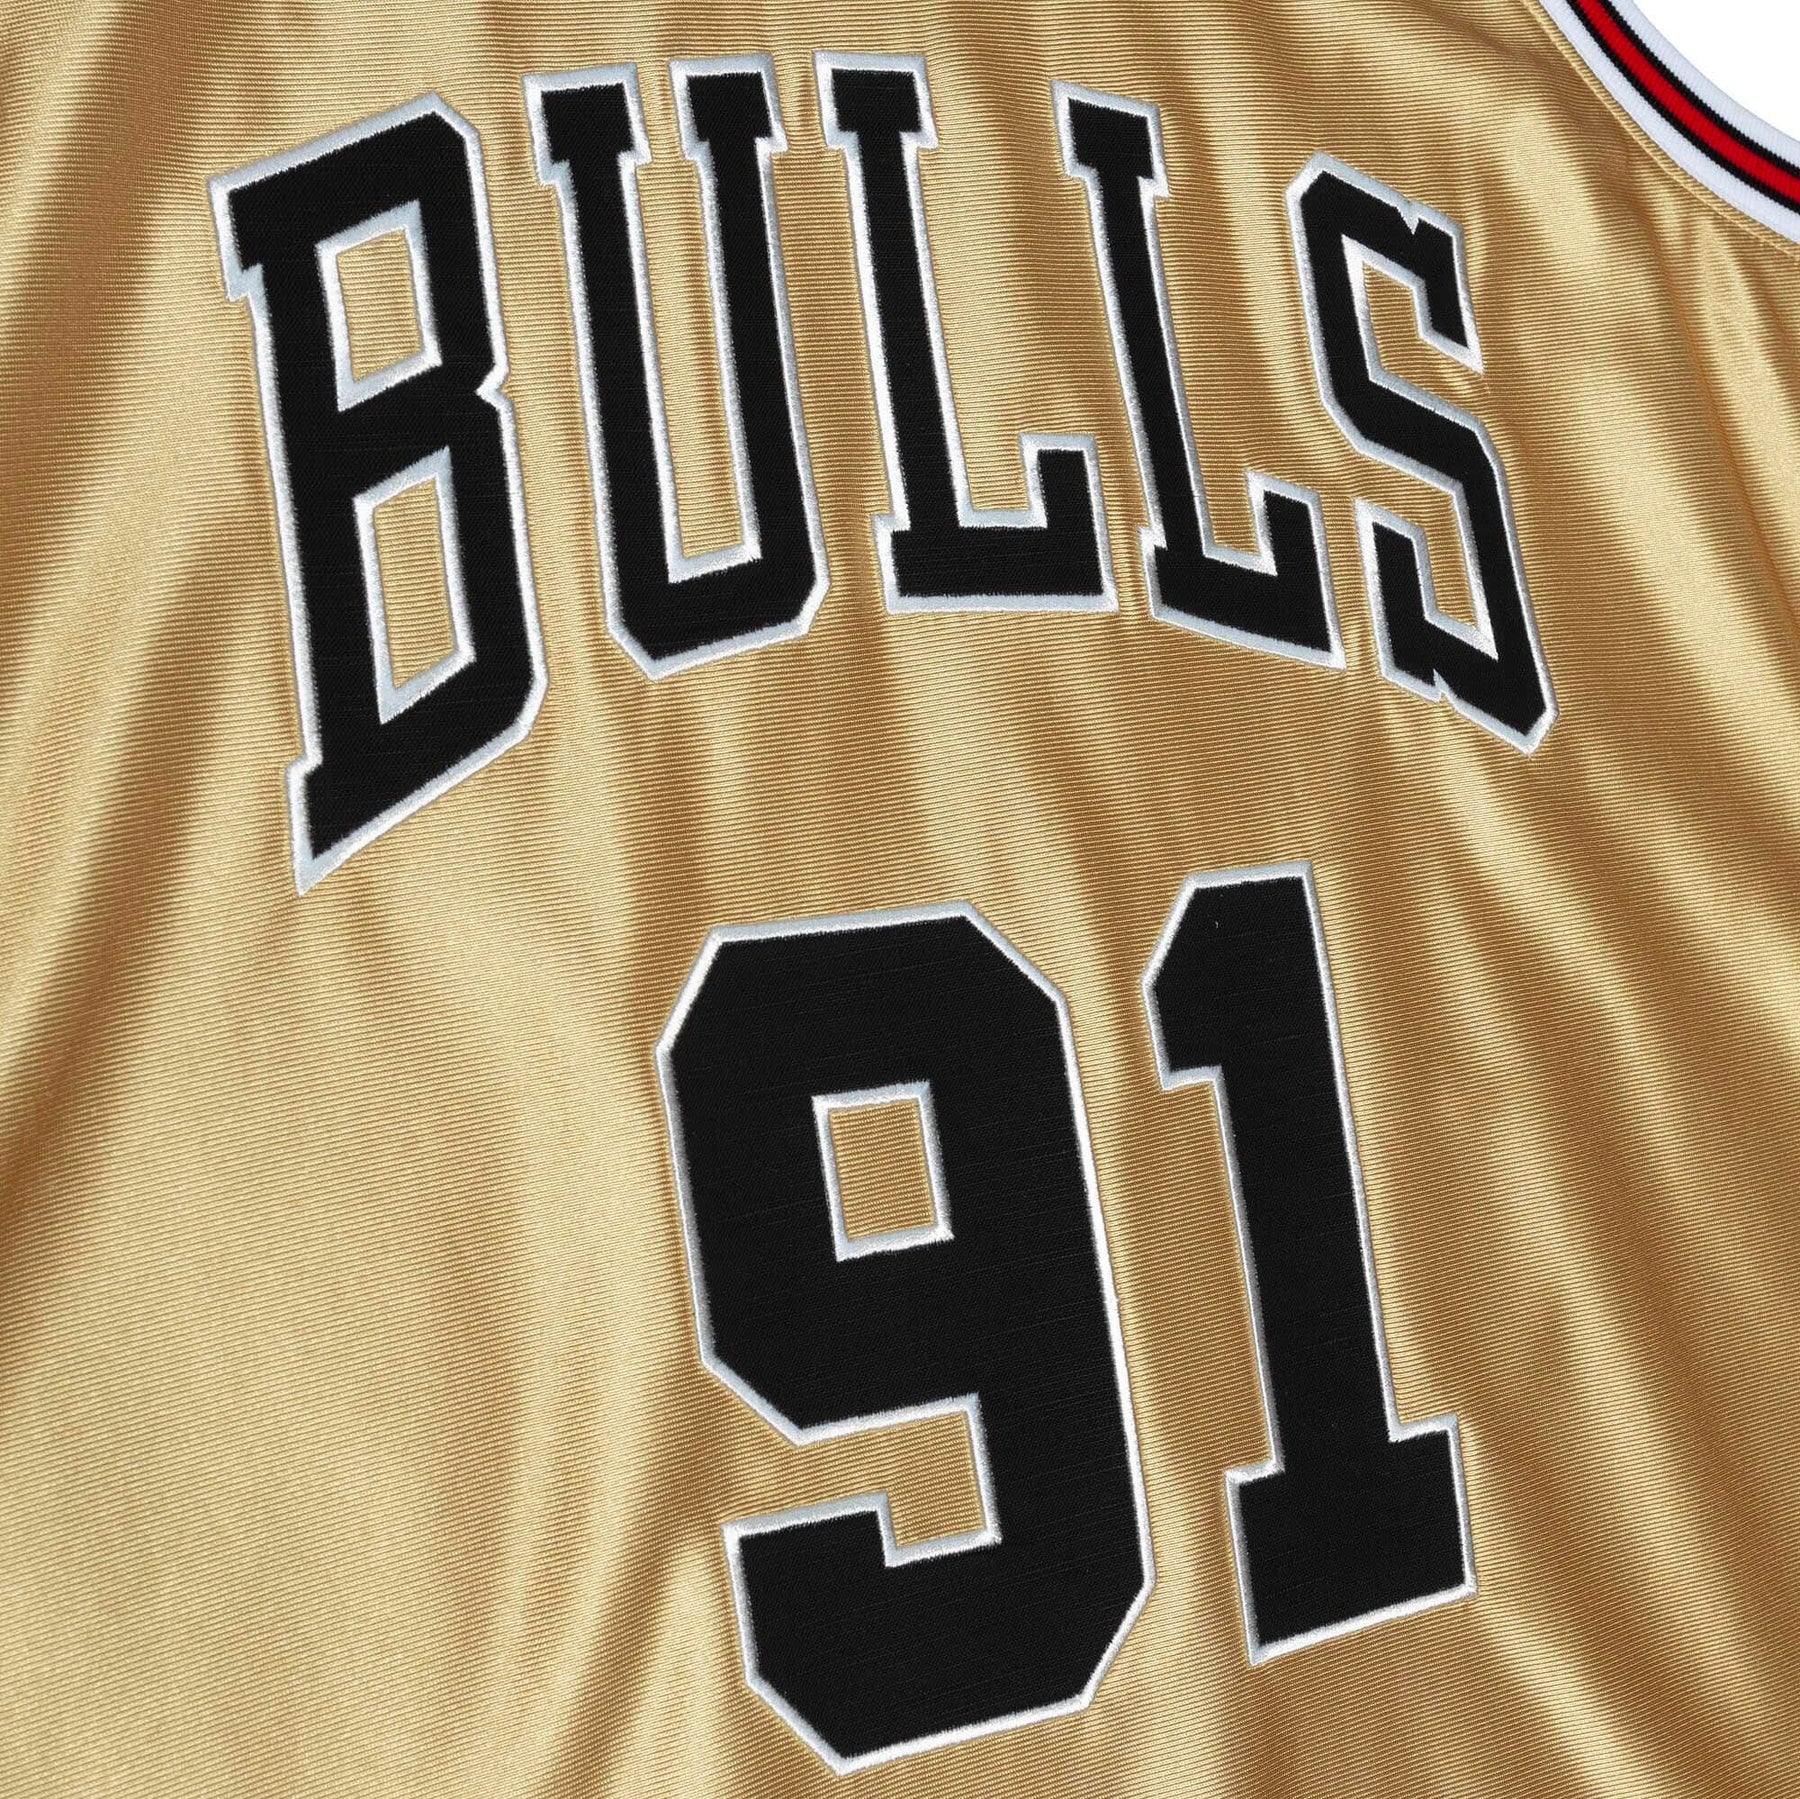 Mitchell & Ness 75th Anniversary Gold Swingman Scottie Pippen Chicago Bulls 1997-98 Jersey